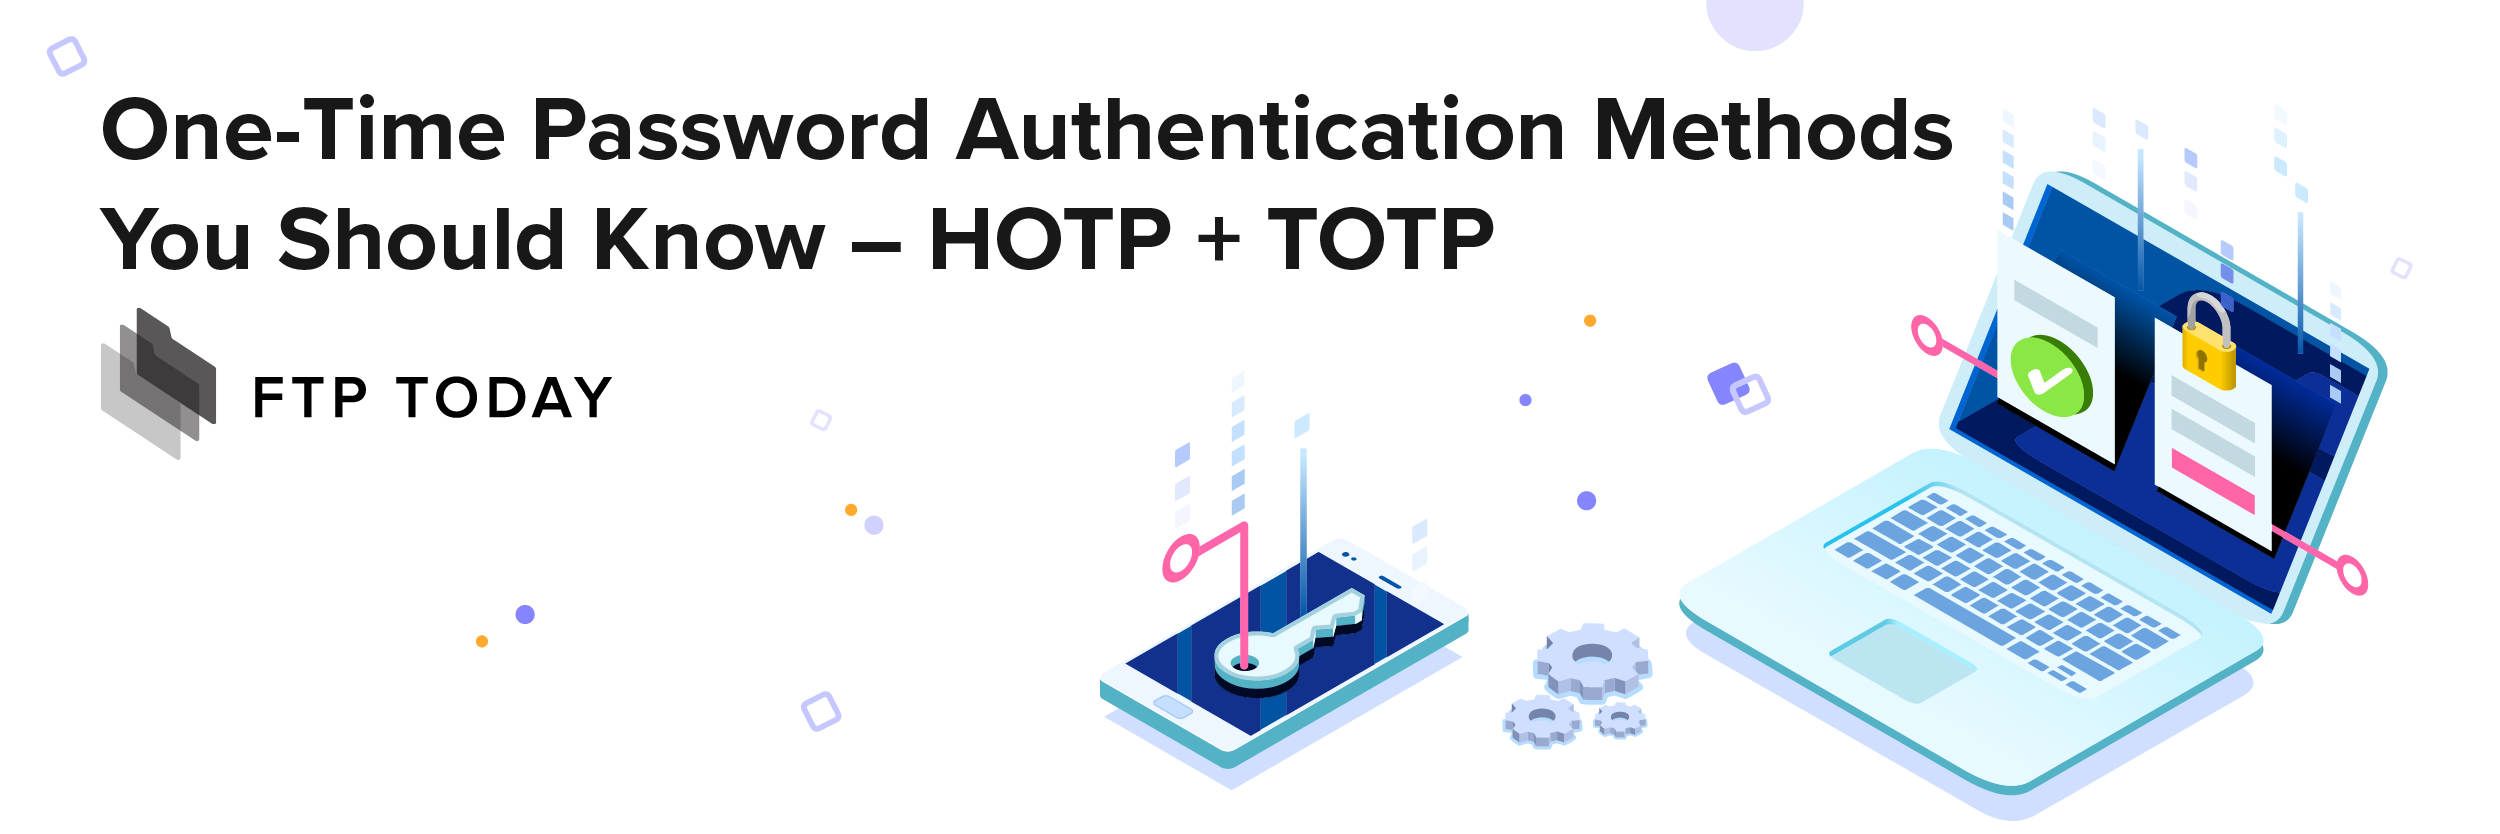 authenticator hotp totptrackidsp 006